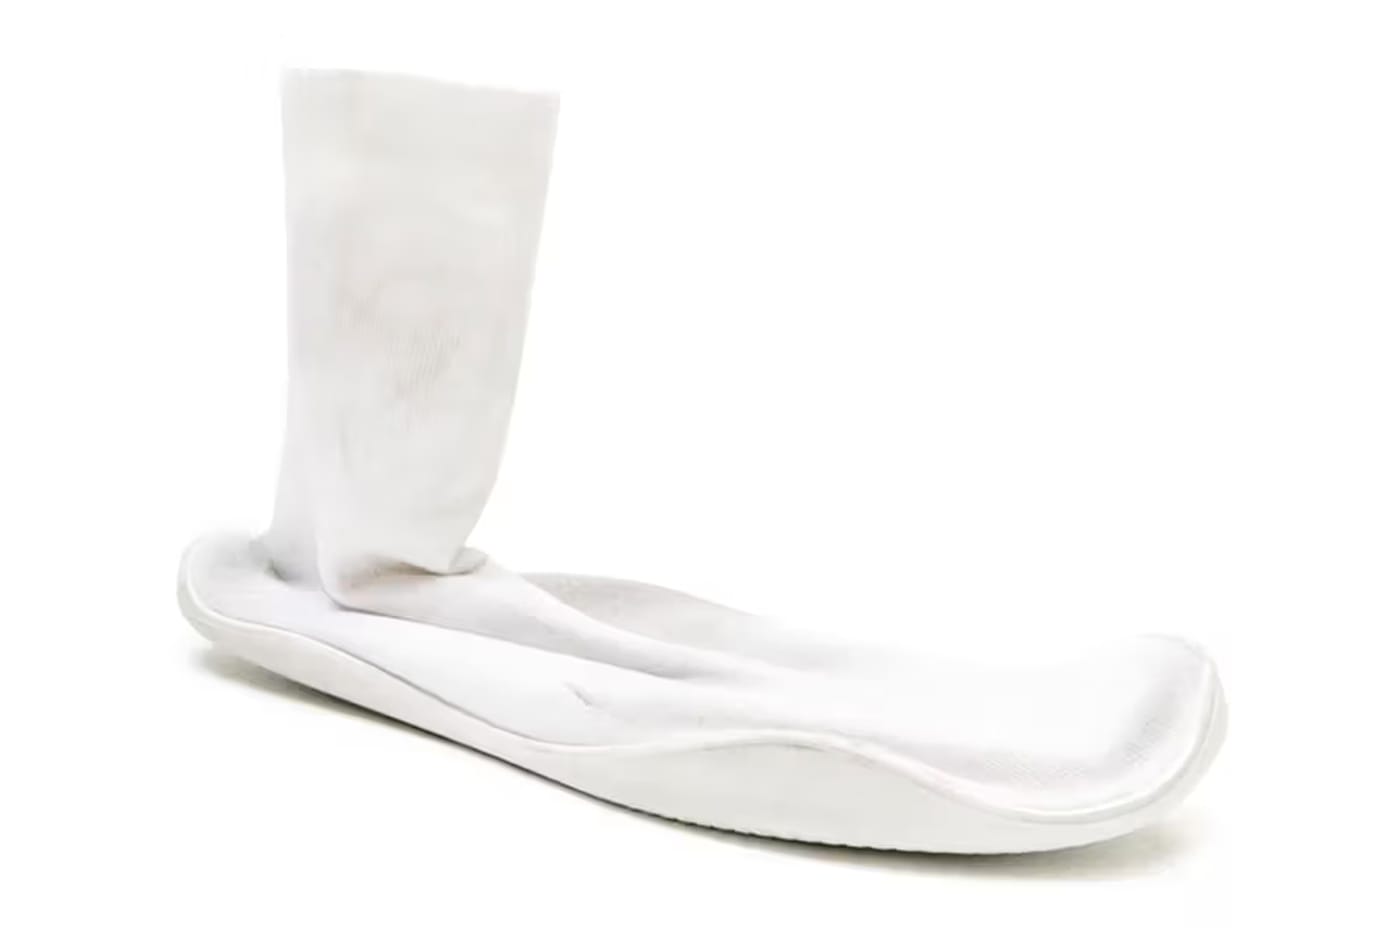 Balenciaga Speed Sock Slip-On Black White Men's - Sneakers - US